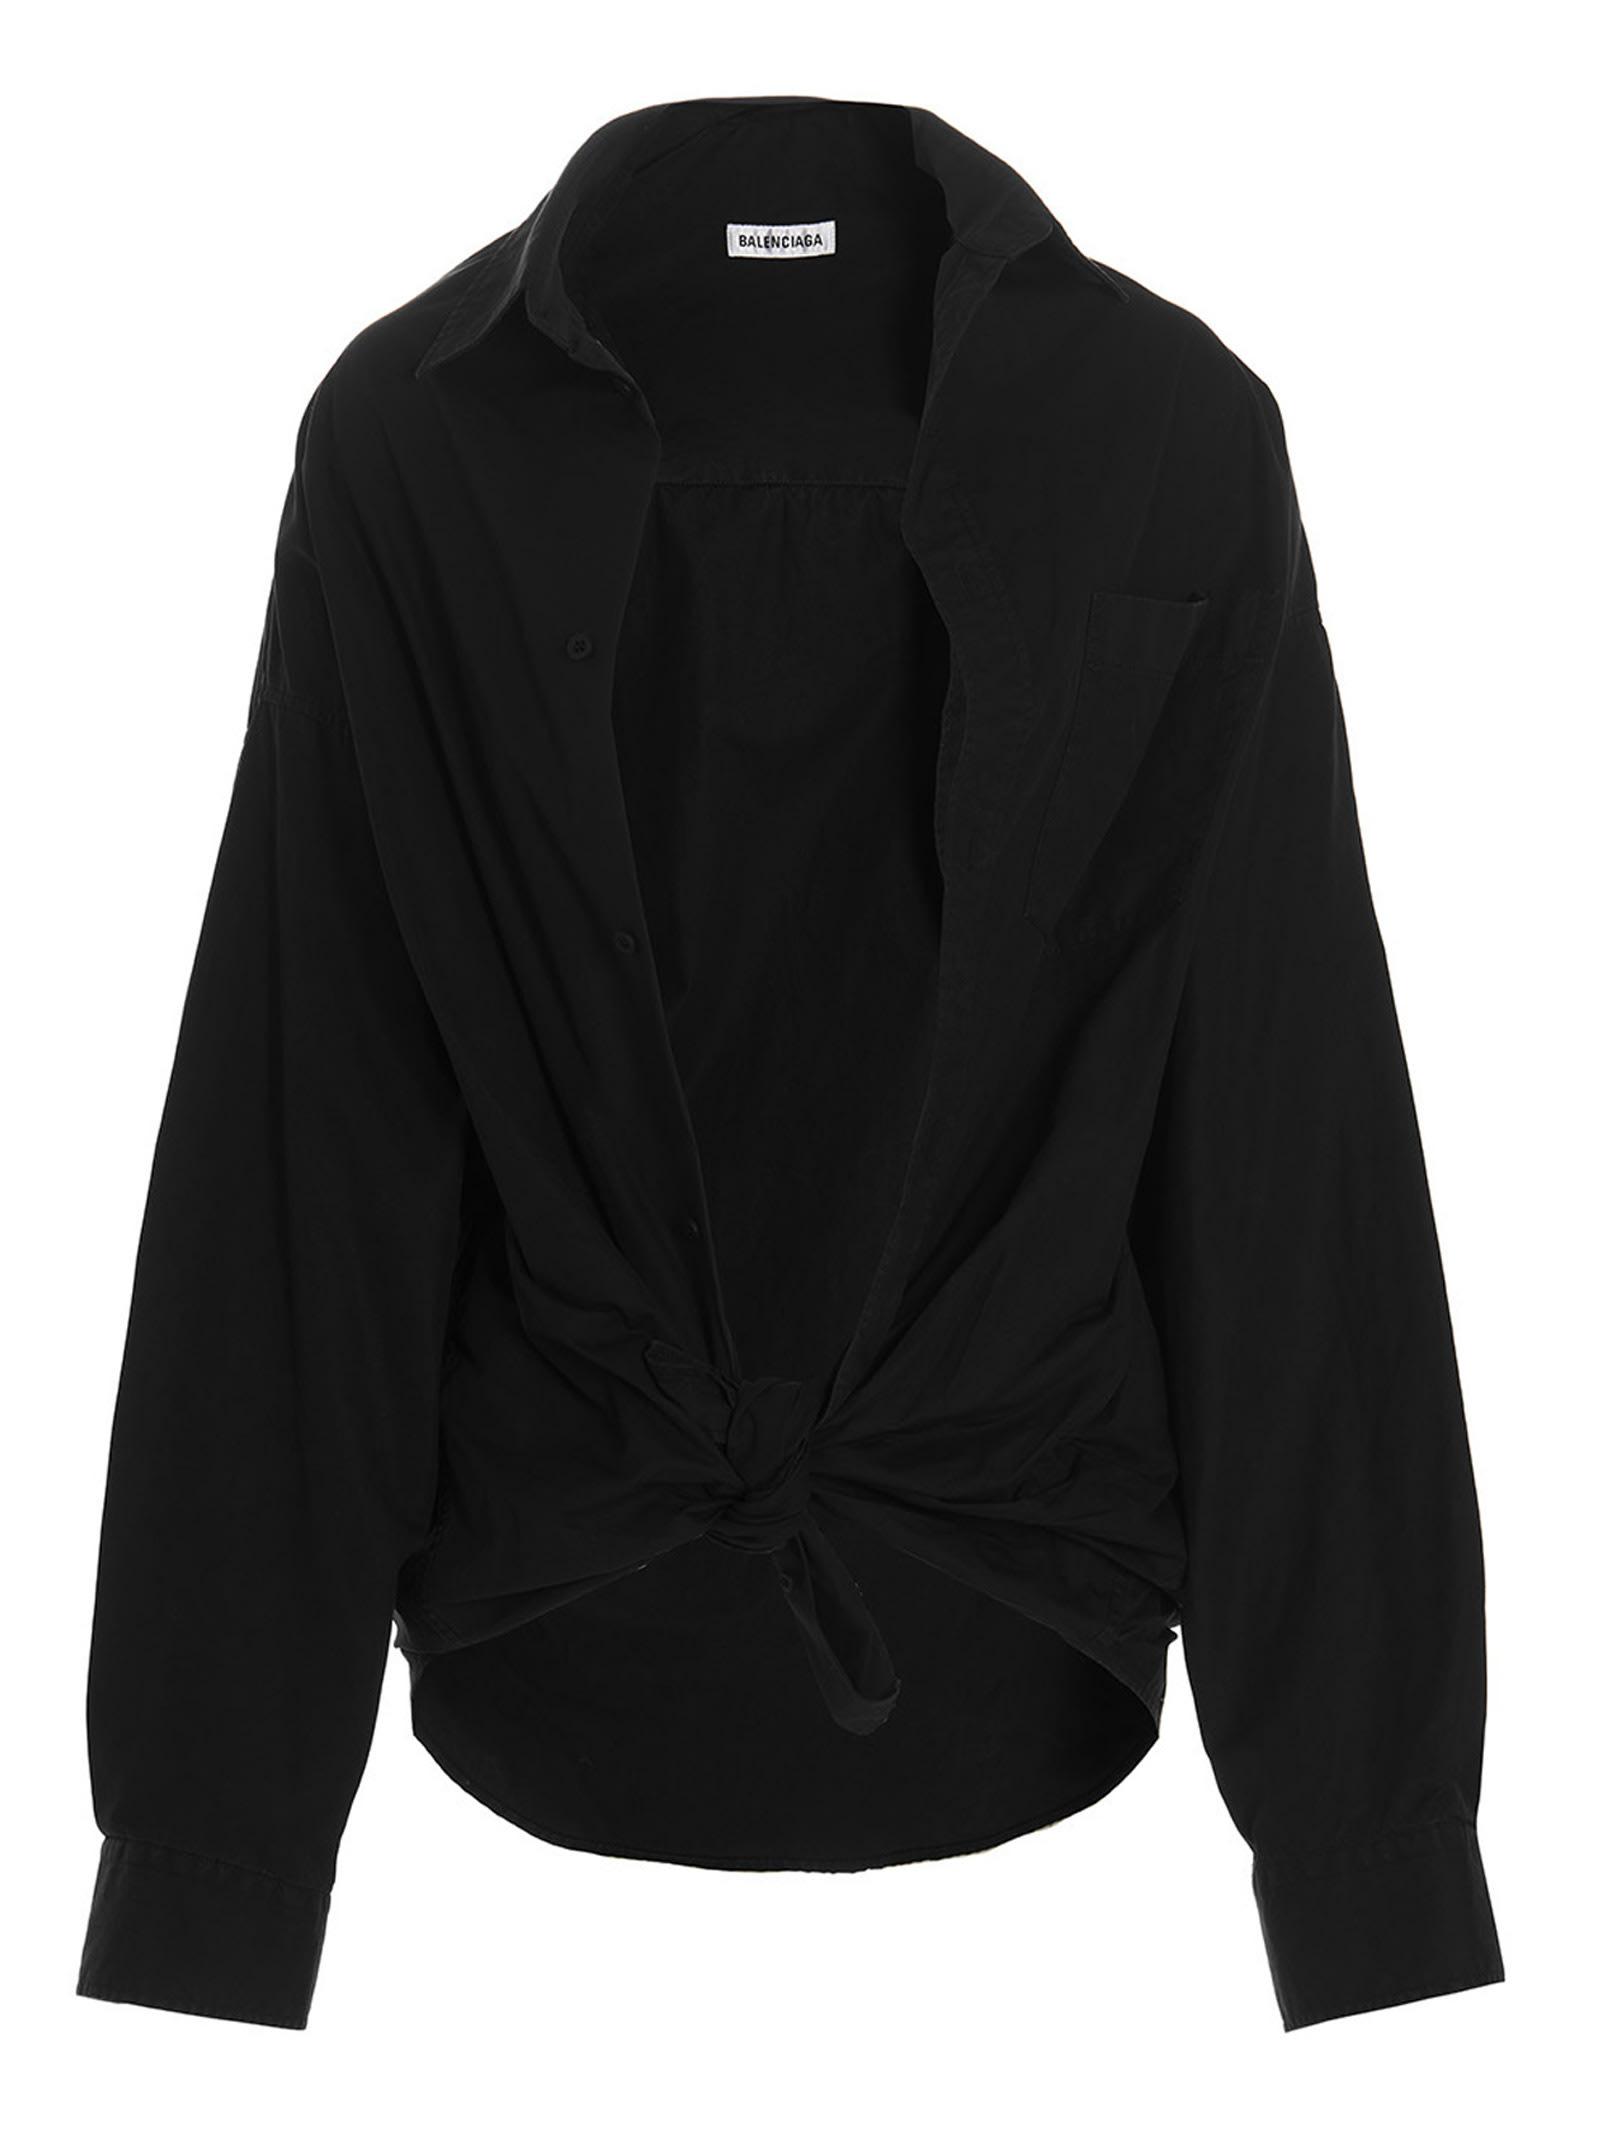 Balenciaga Lifted Collar Shirt in Black | Lyst